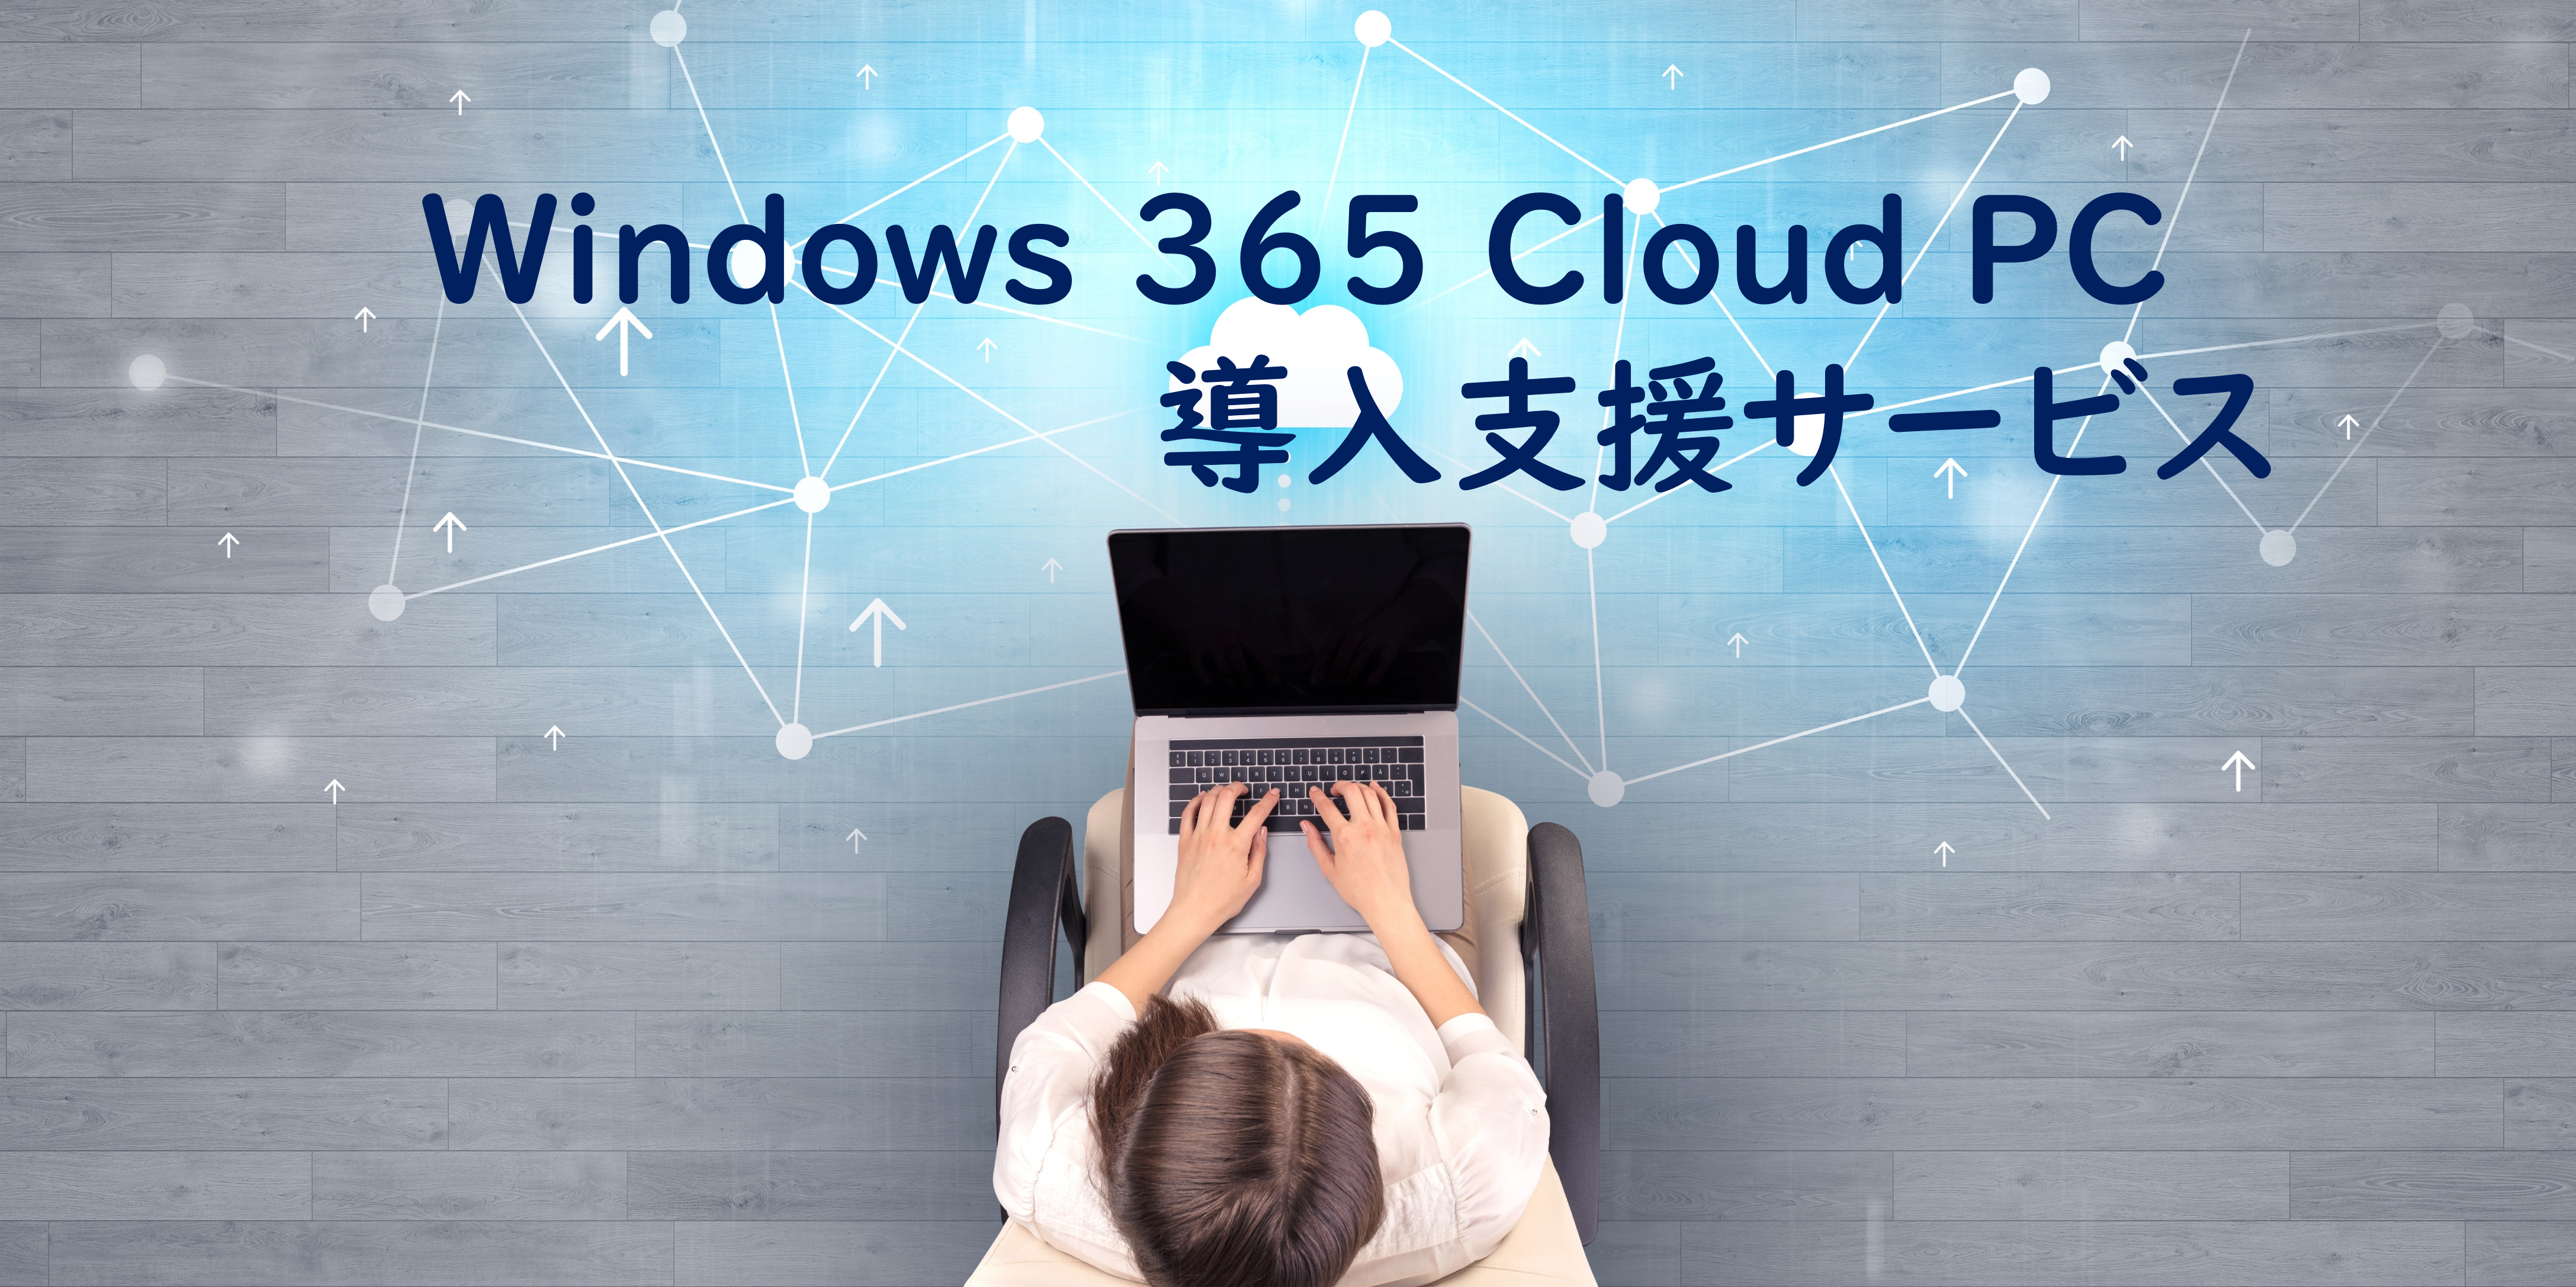 提供開始:Windows 365 Cloud PC 導入支援サービス